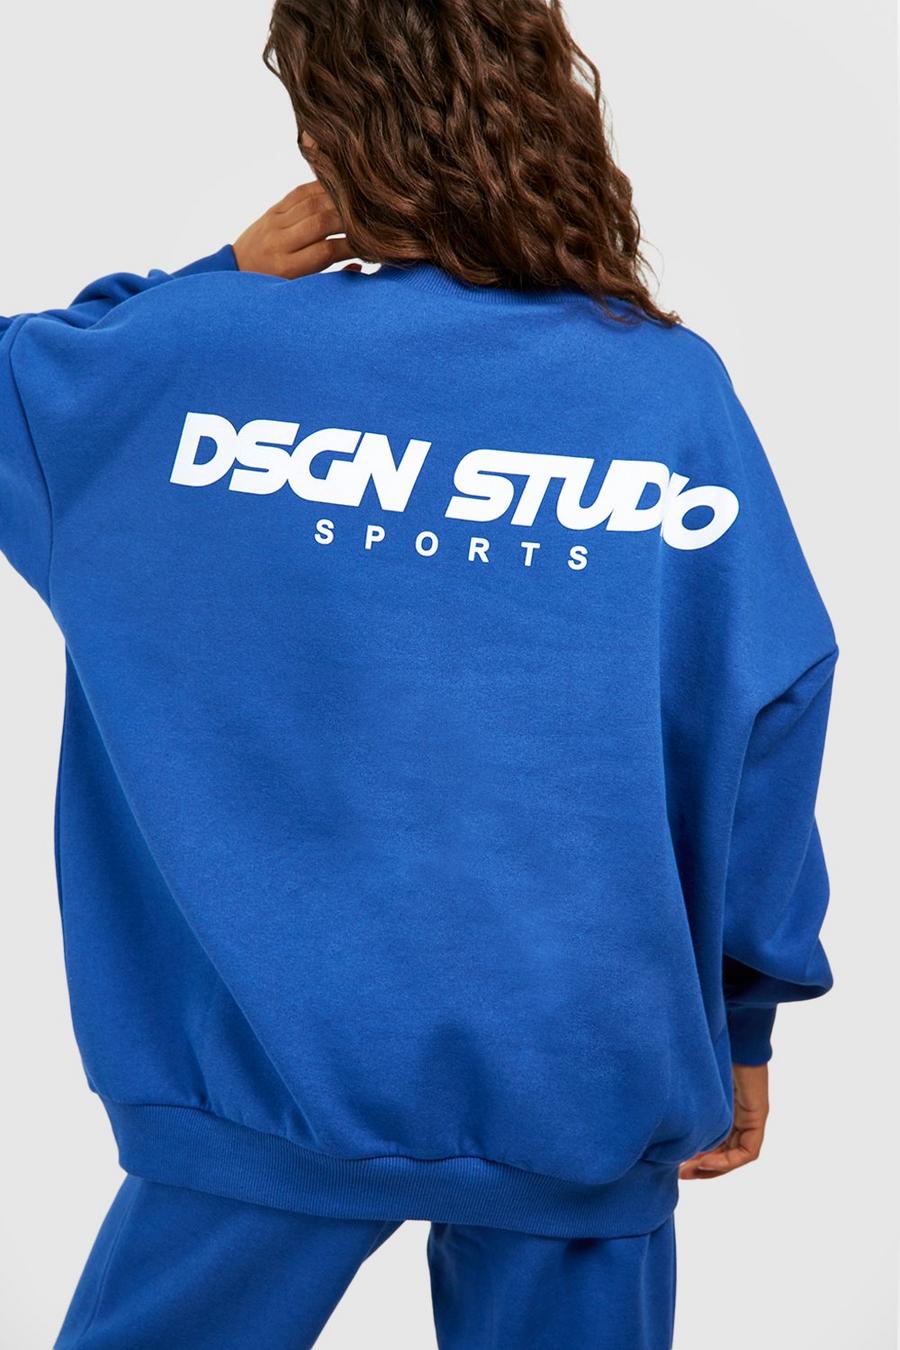 Felpa oversize Dsgn Studio Sports, Cobalt